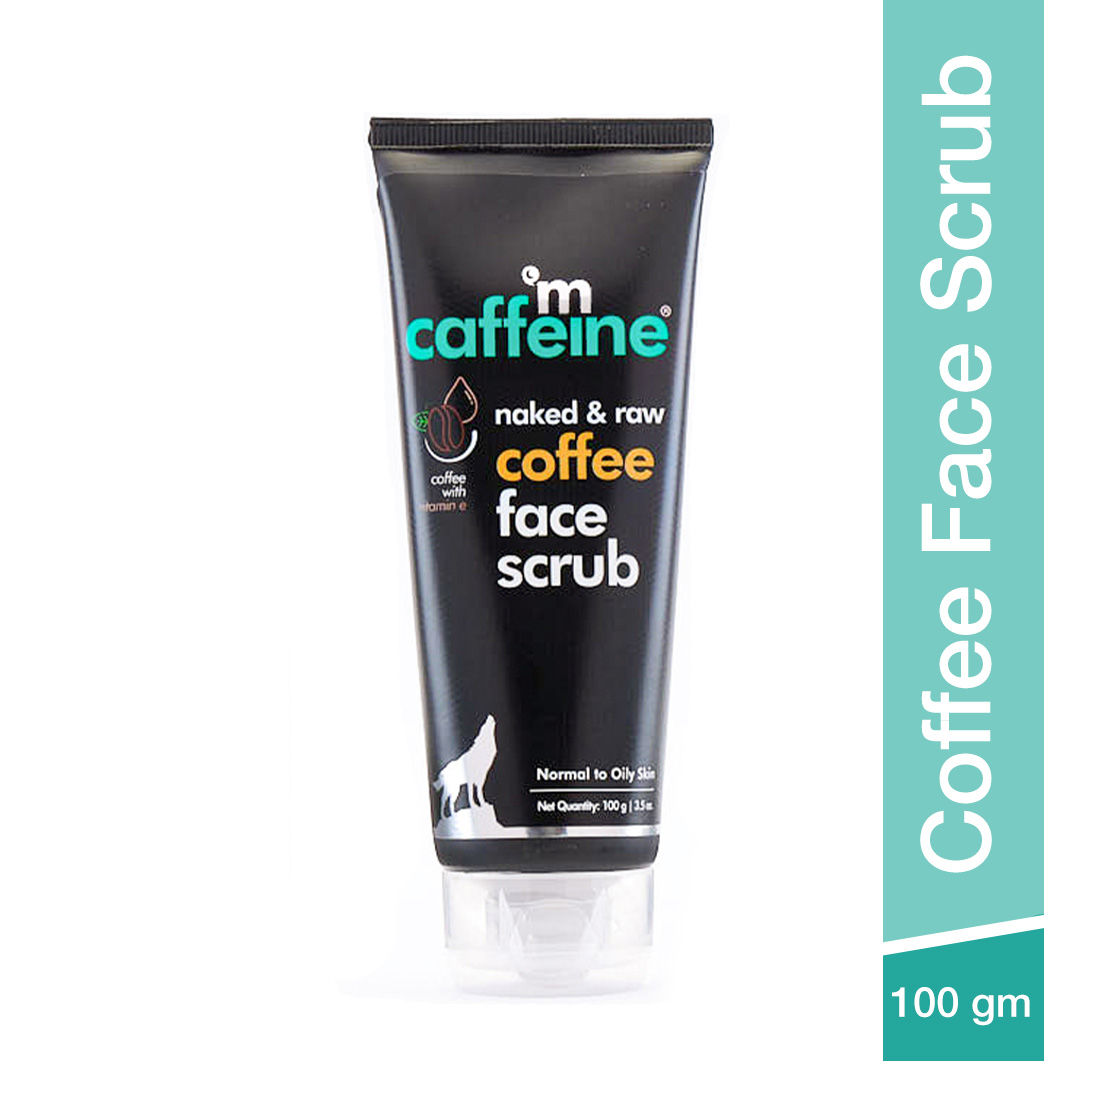 MCaffeine Exfoliating Coffee Face Scrub with Walnut & Vitamin E for Fresh & Glowing Skin - Removes Tan & Blackheads